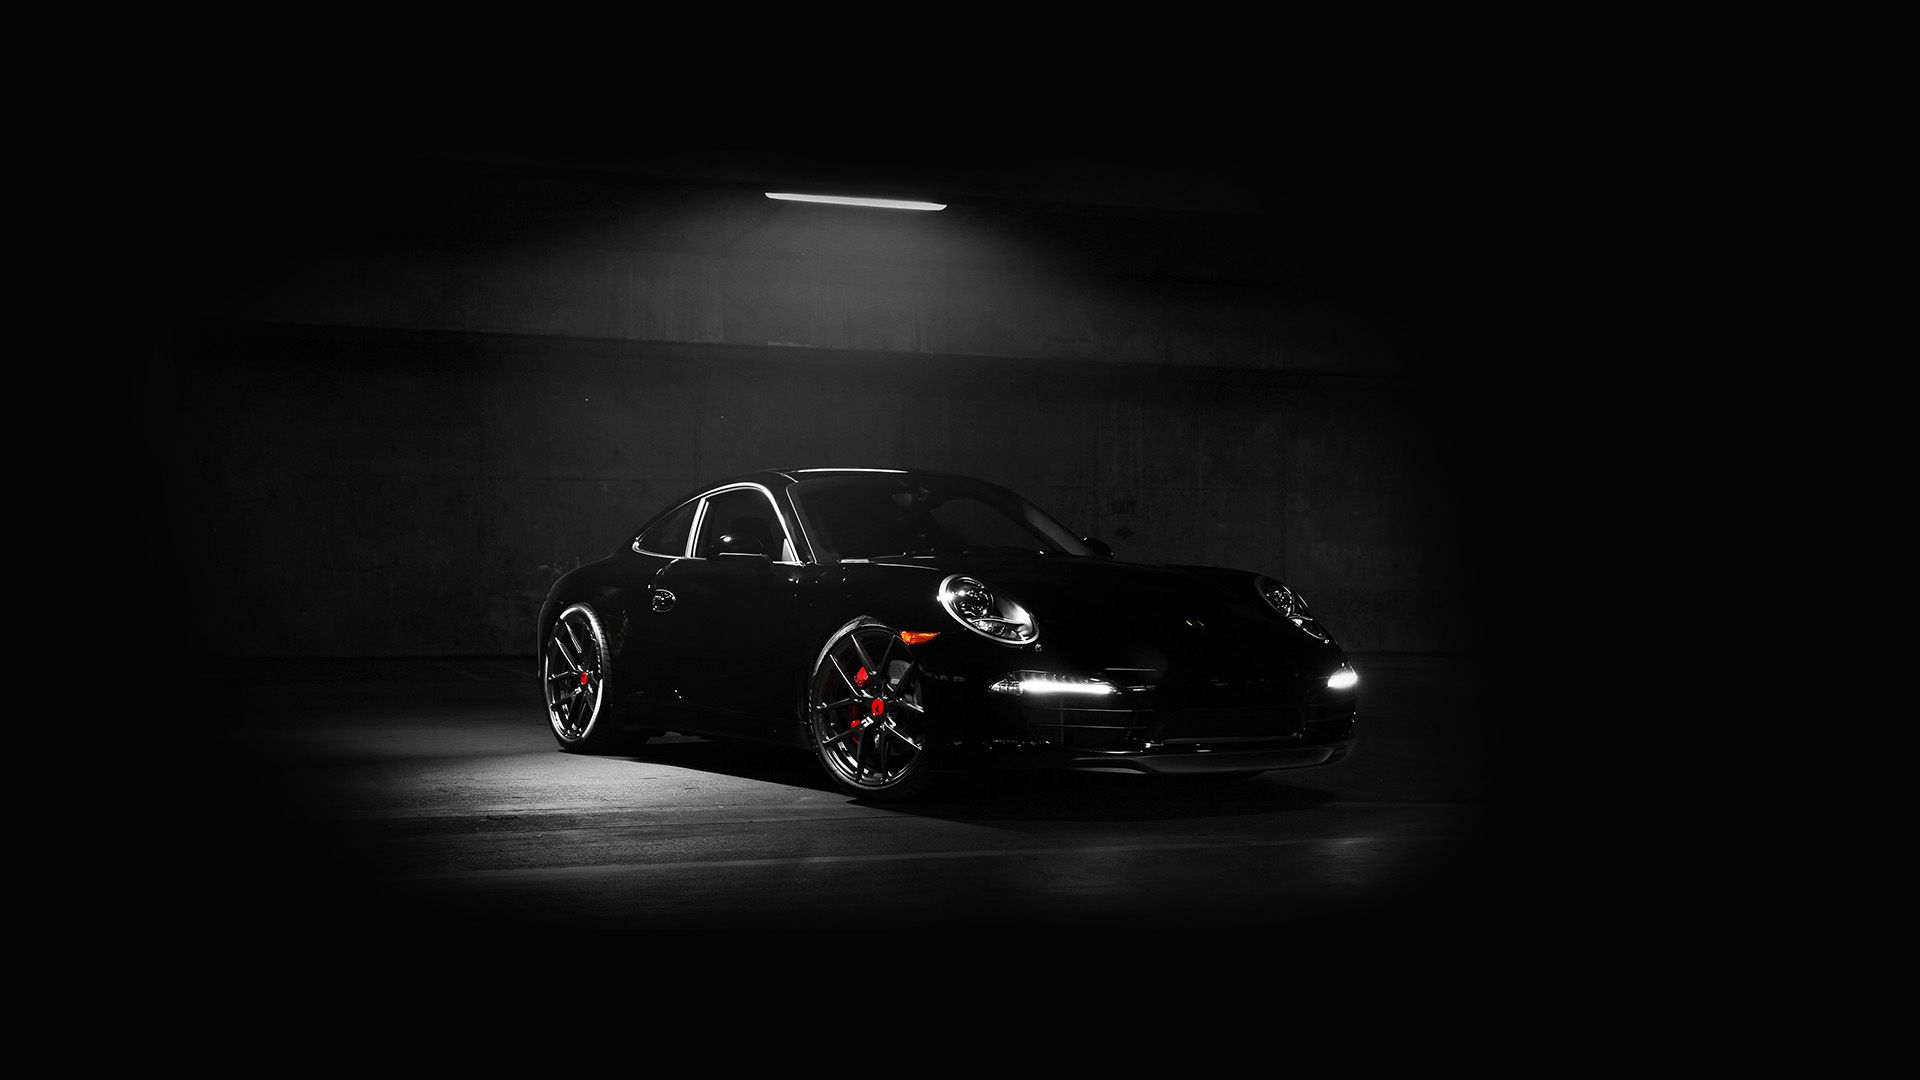 Porsche Illustration Art Super Car Black Dark Wallpaper